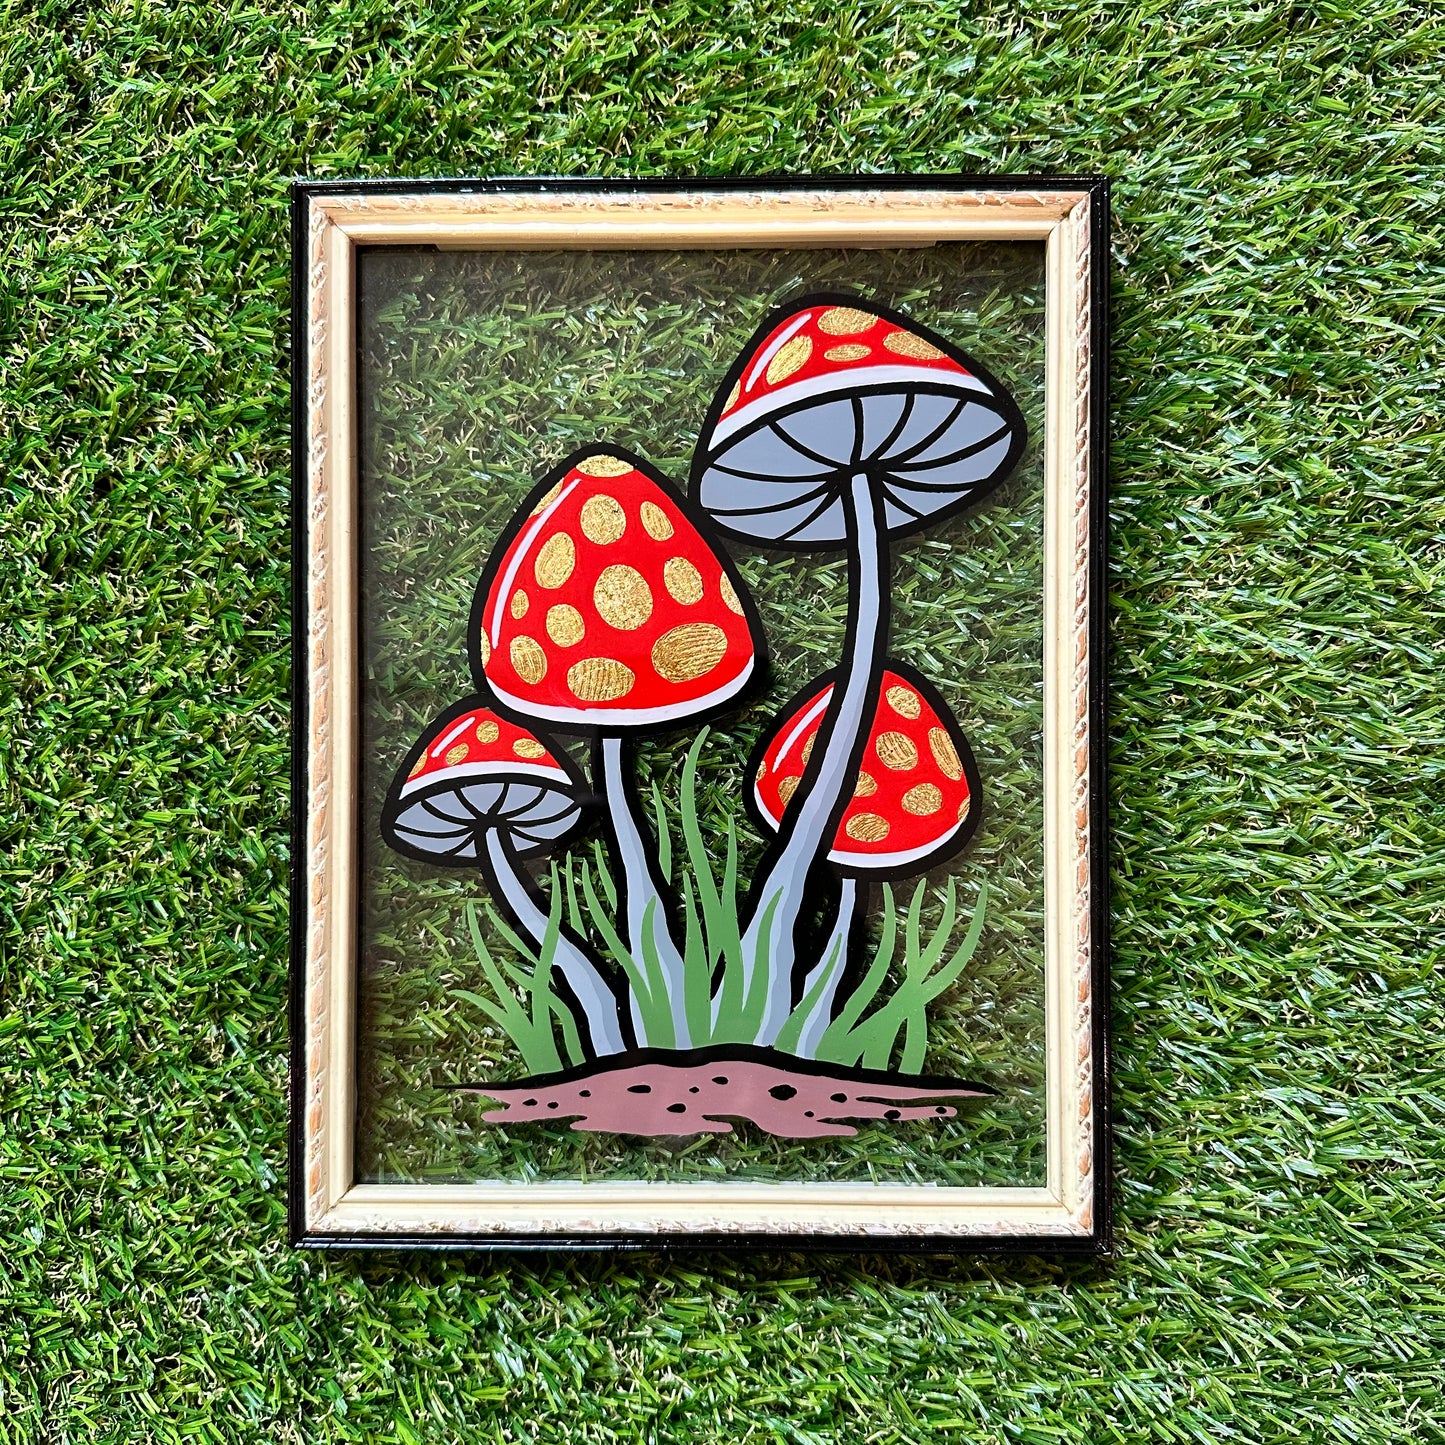 Original Painting - Mushrooms on Glass